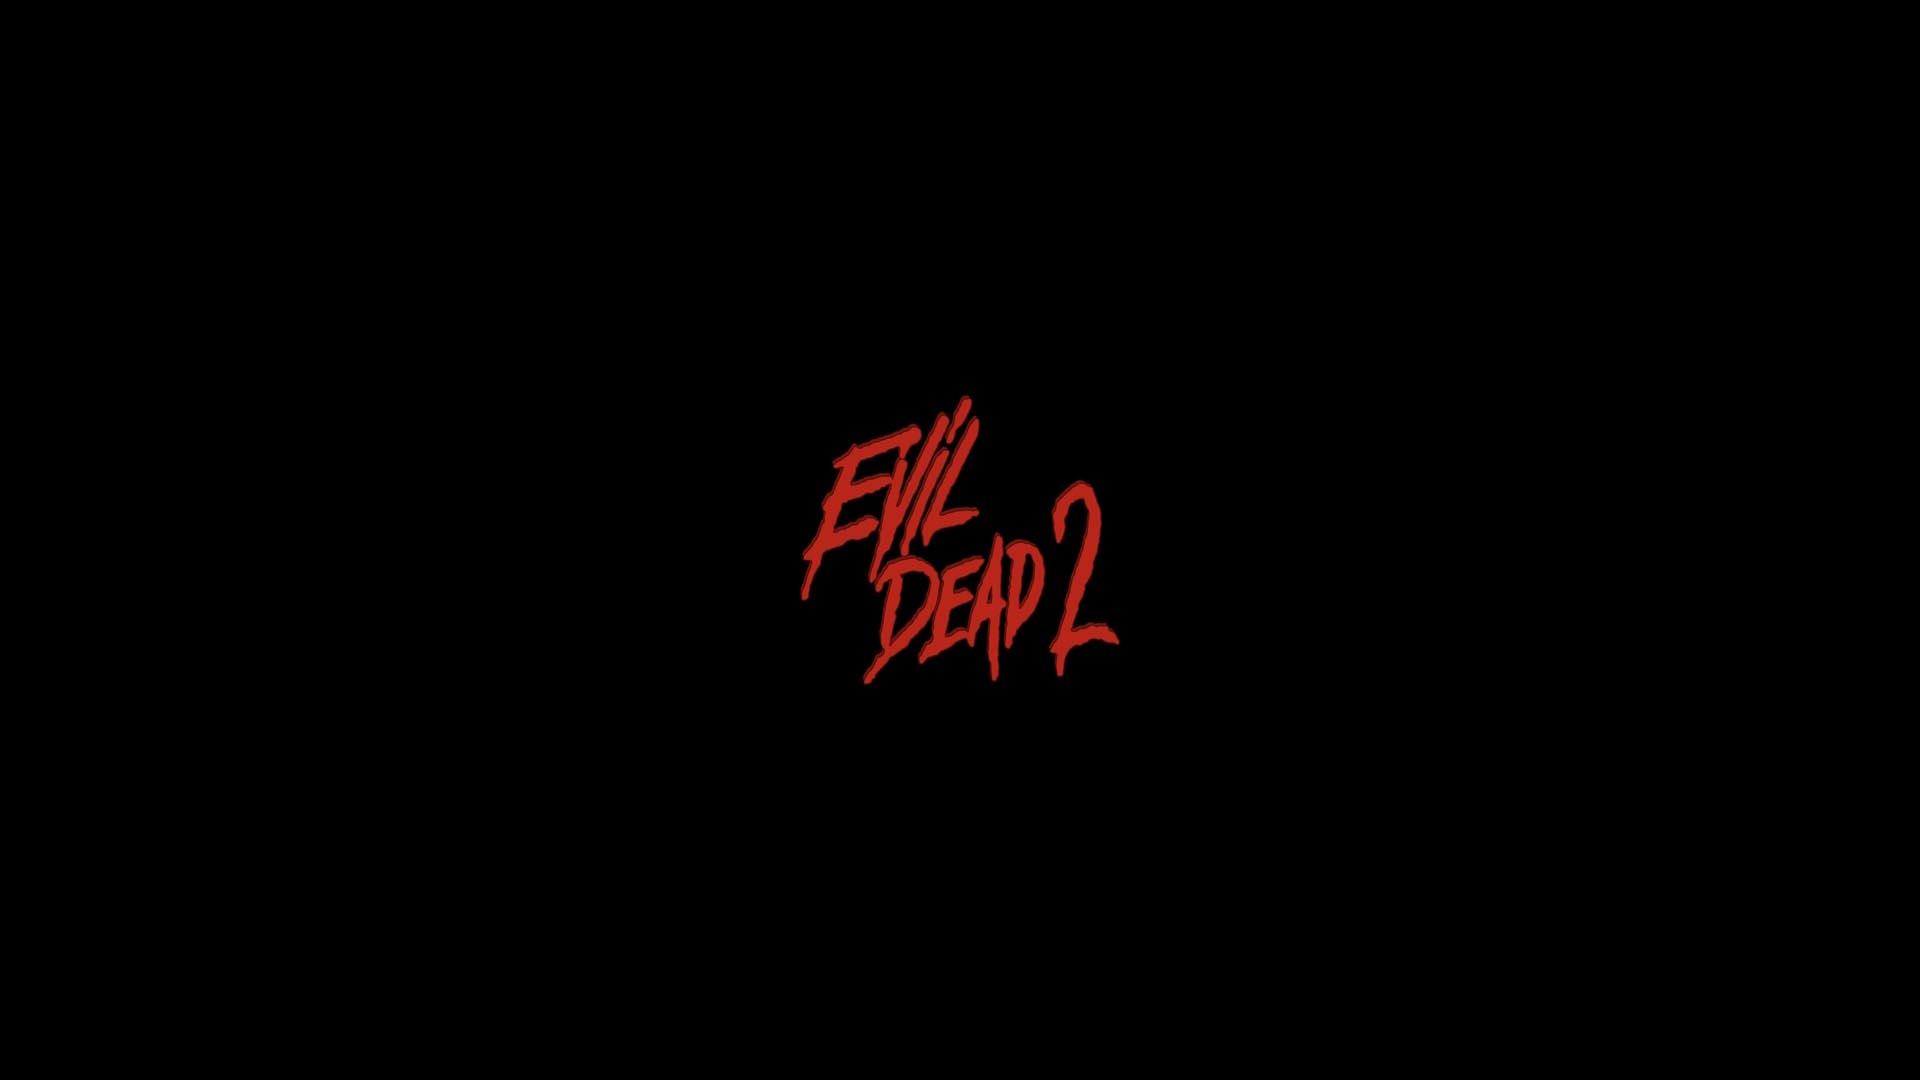 Evil Dead II at 1024 x 1024 iPad size wallpapers HD quality